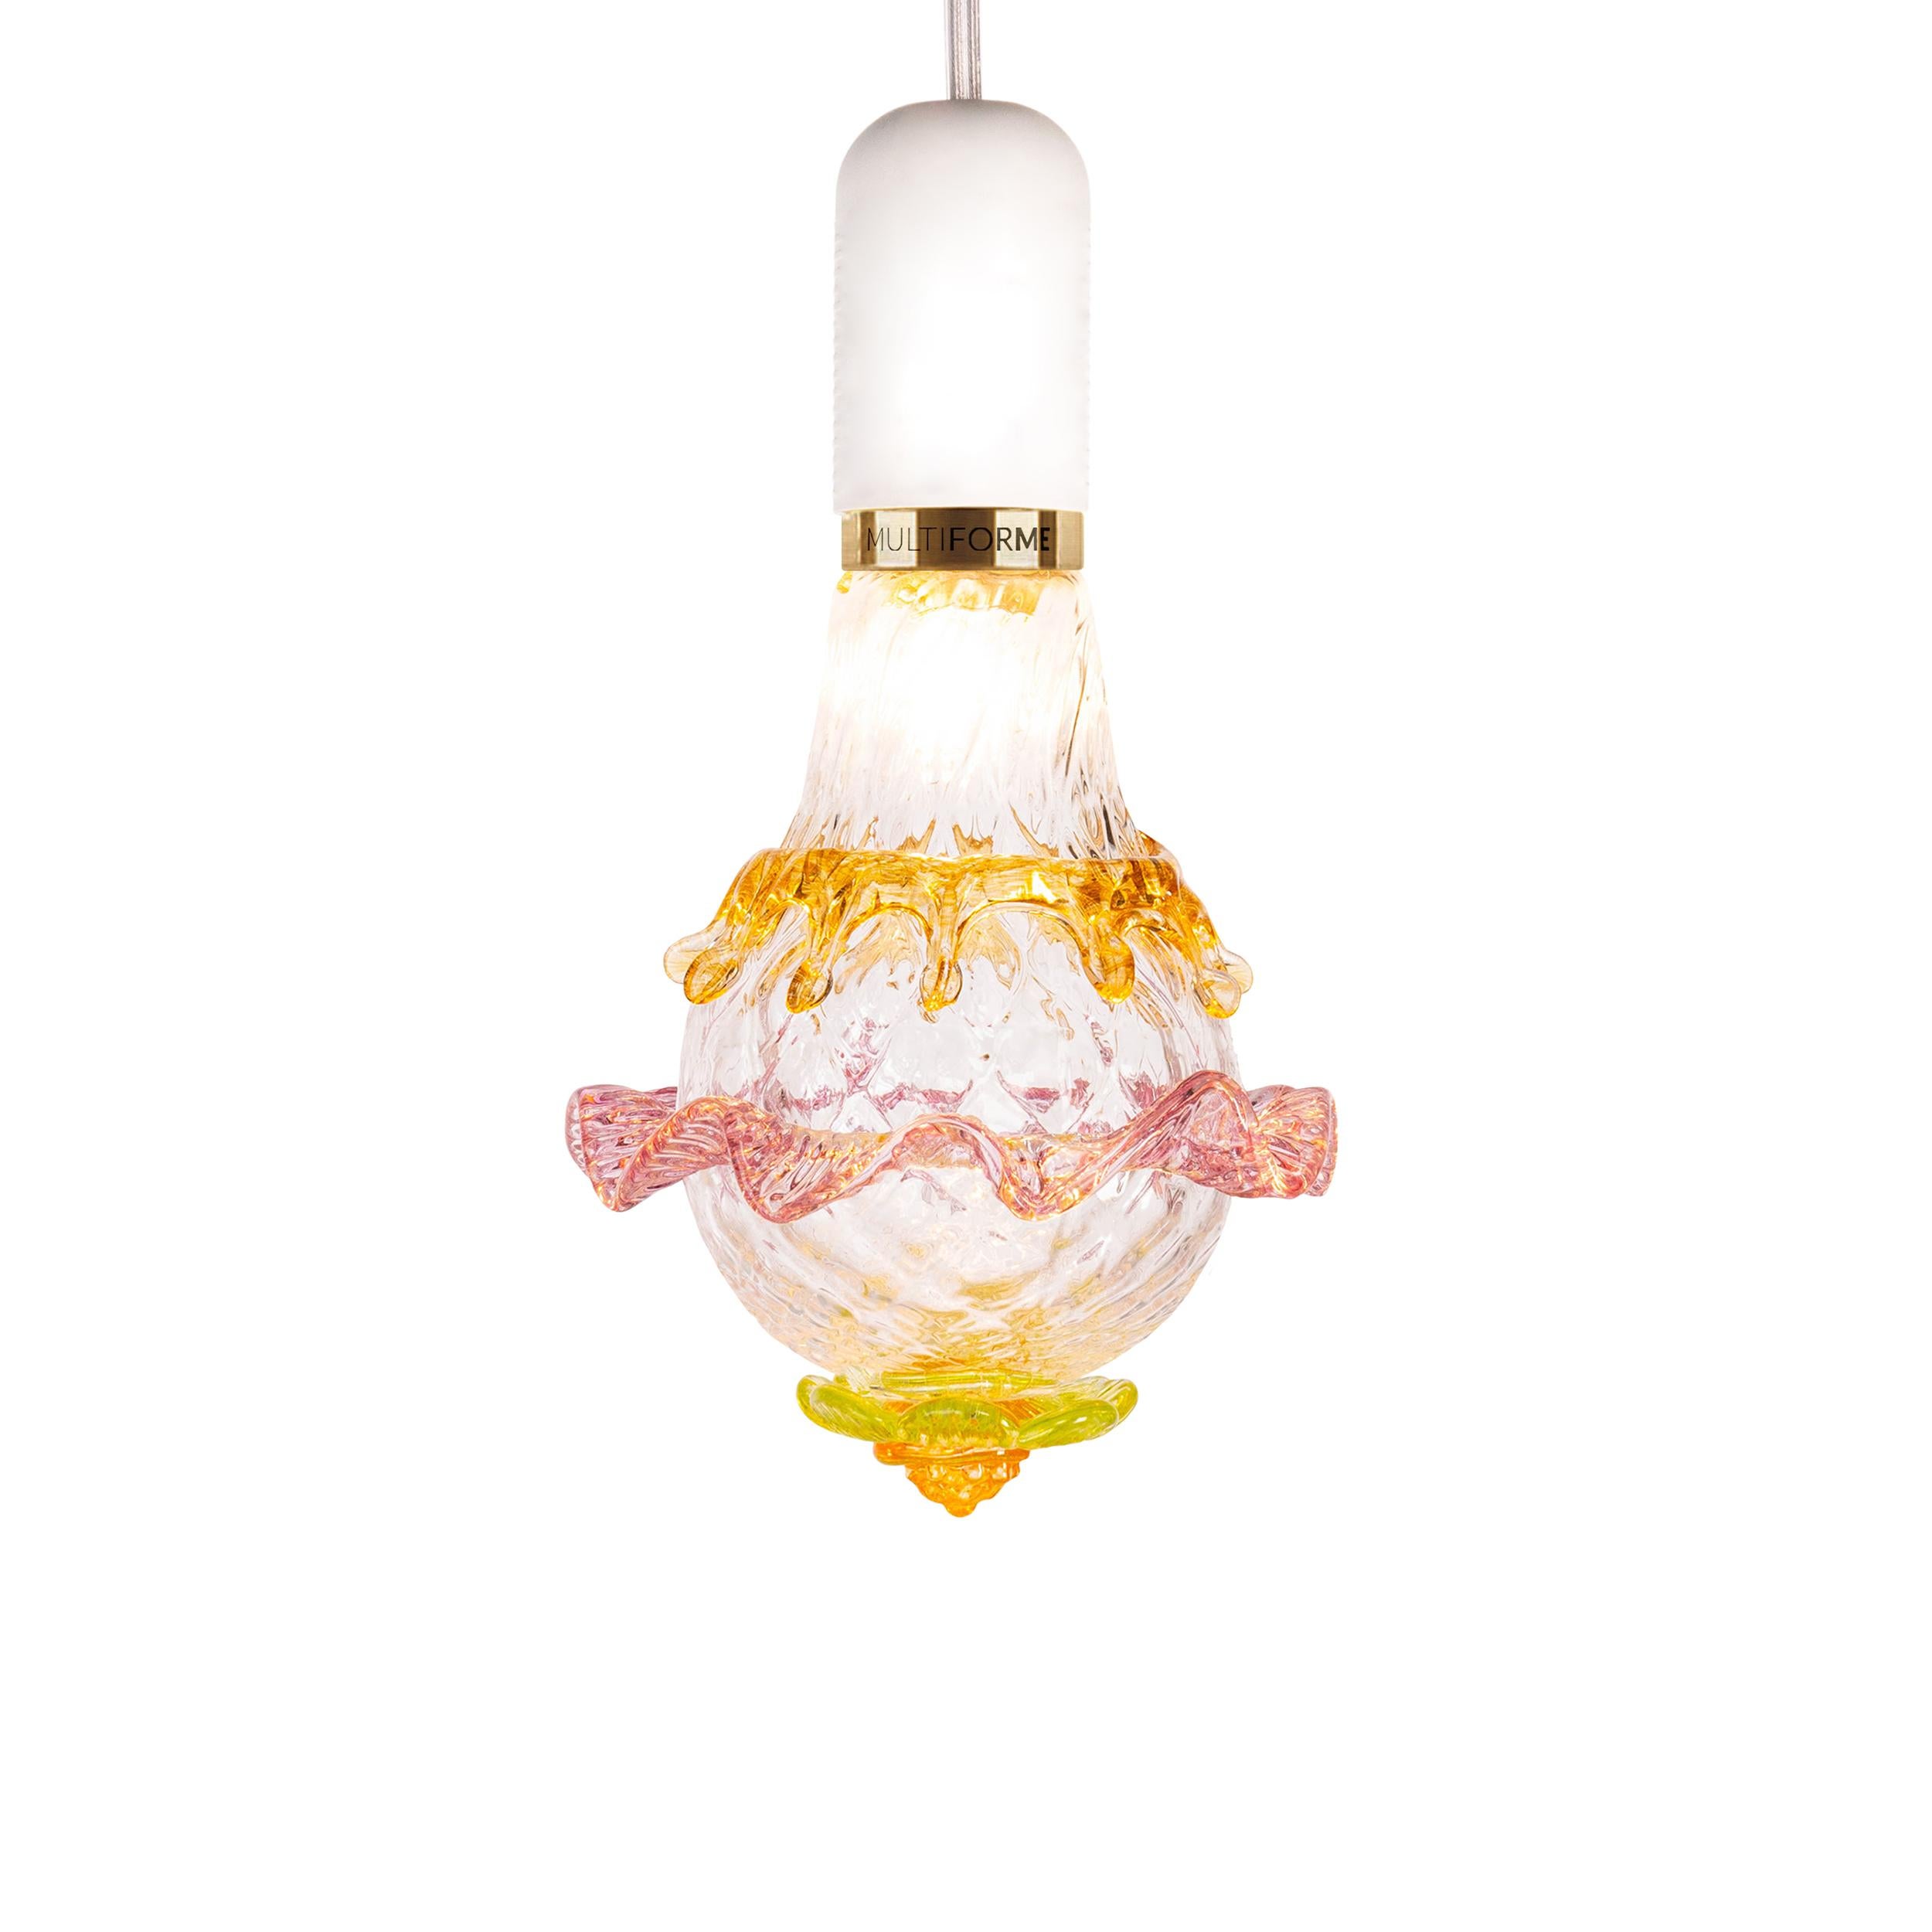 Artistic glass lightbulb chandelier Murano Bulb Marcantonio X Multiforme #08 In New Condition For Sale In Trebaseleghe, IT